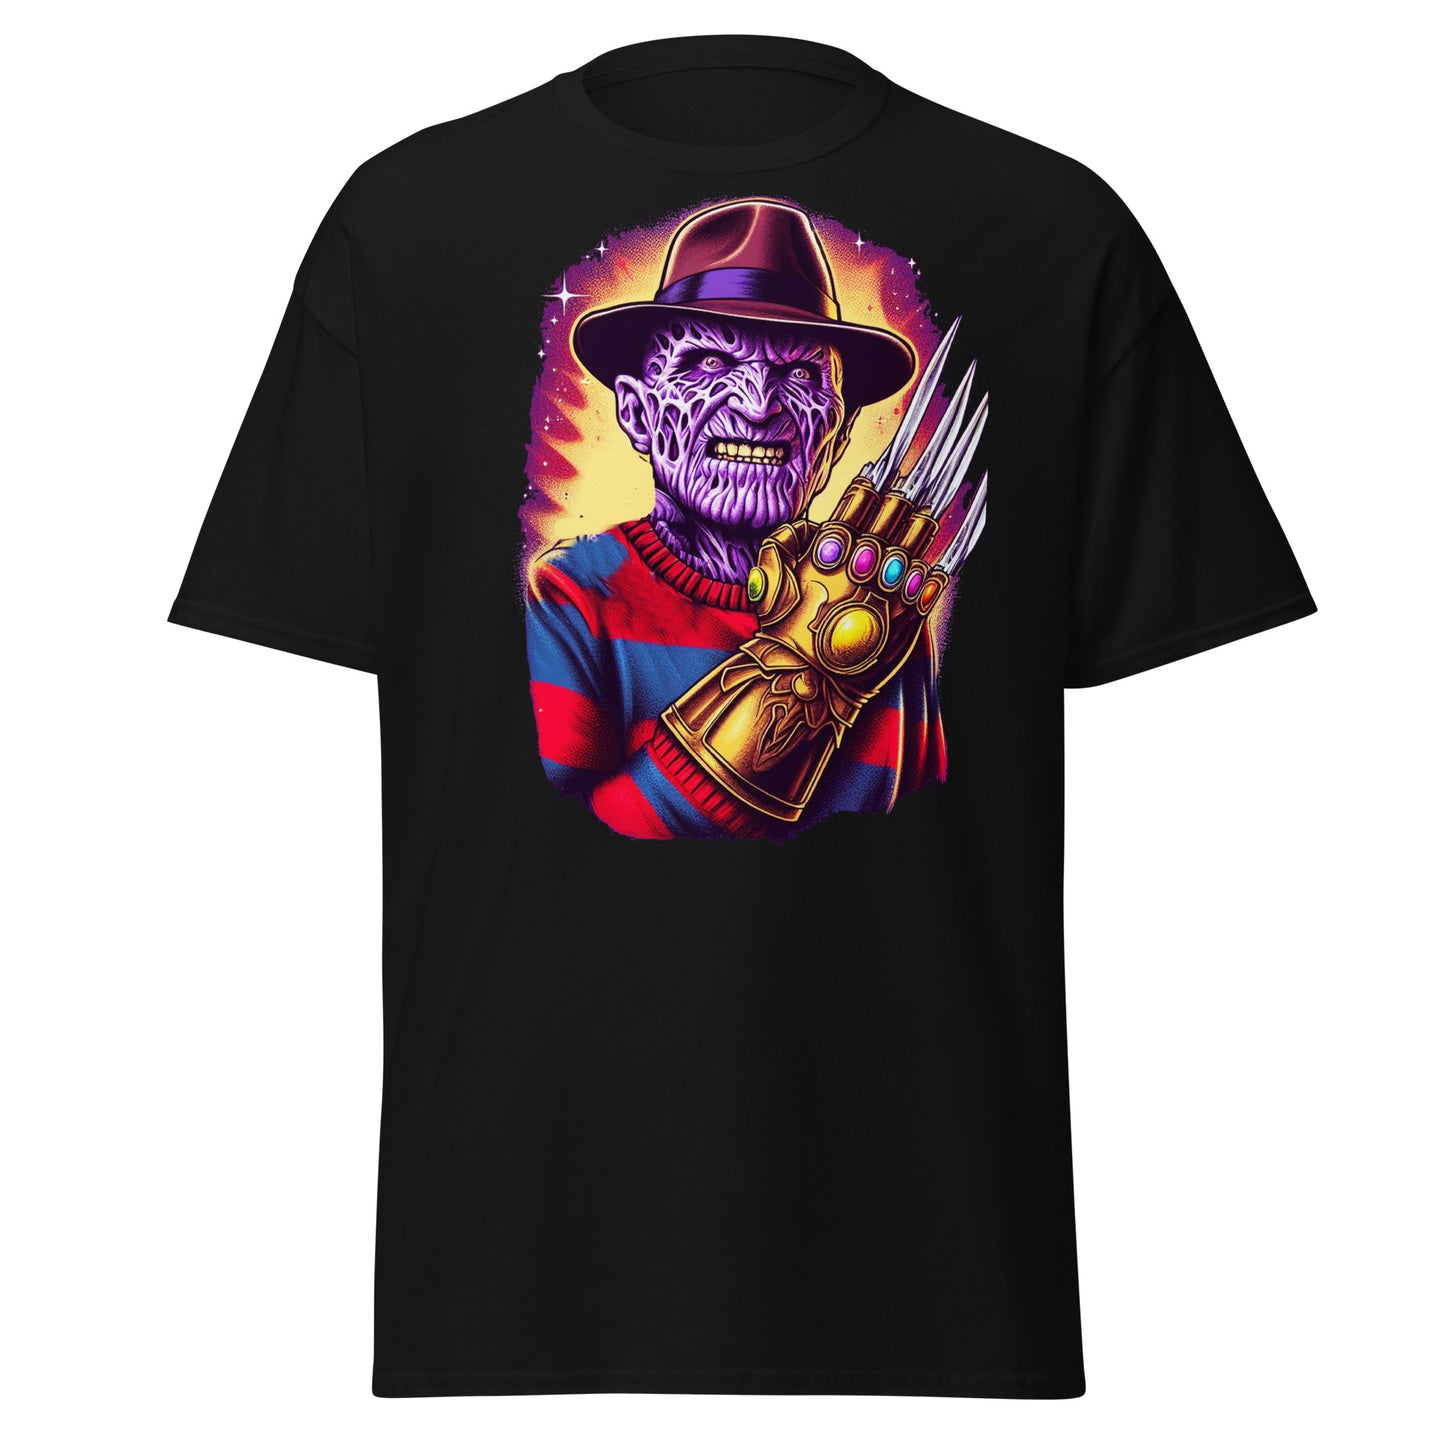 Thanos Freddy krueger mash up tshirt